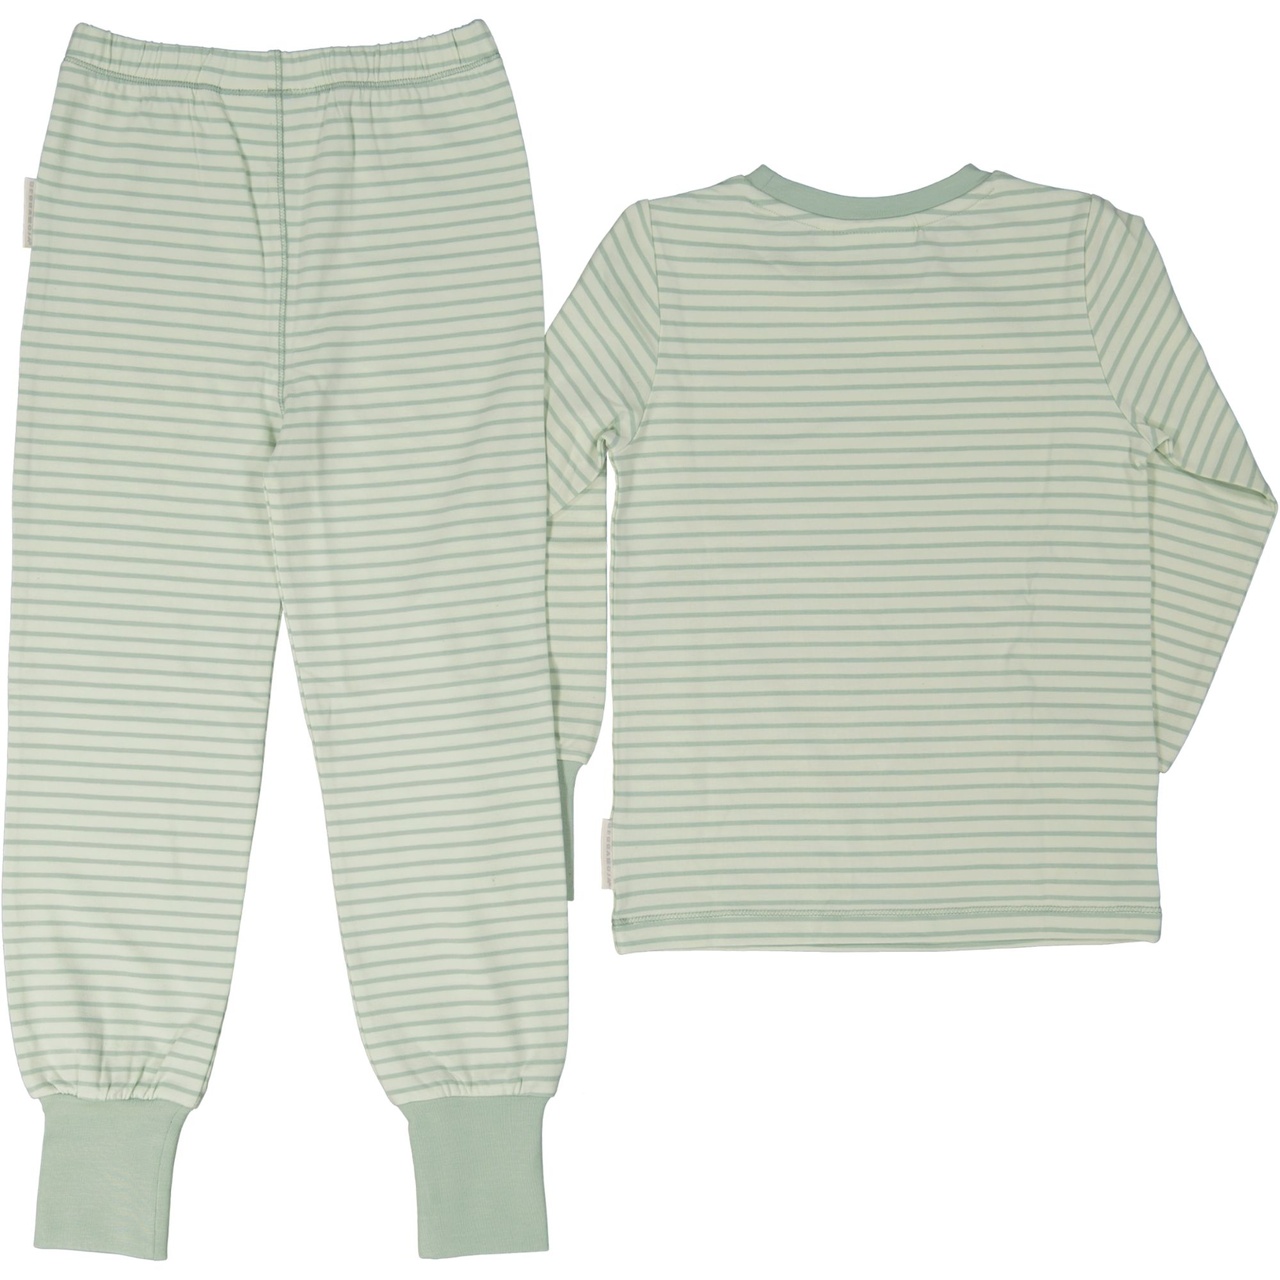 Two pcs pyjamas Classic L.green/green  86/92